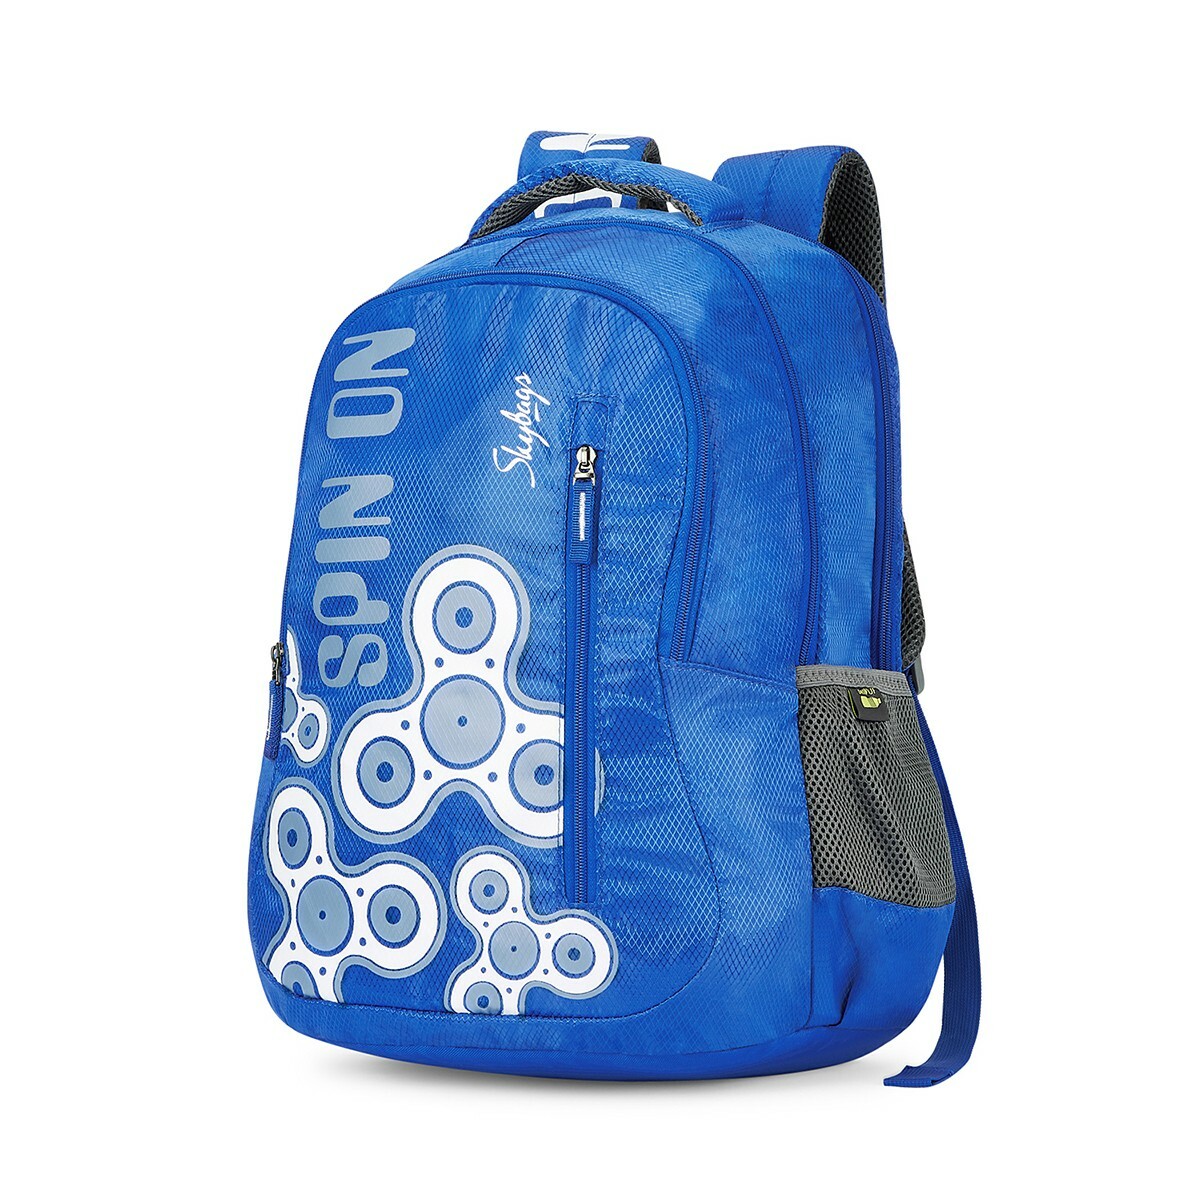 Buy Skybags Backpack New Neon 8 Blue Online - Lulu Hypermarket India